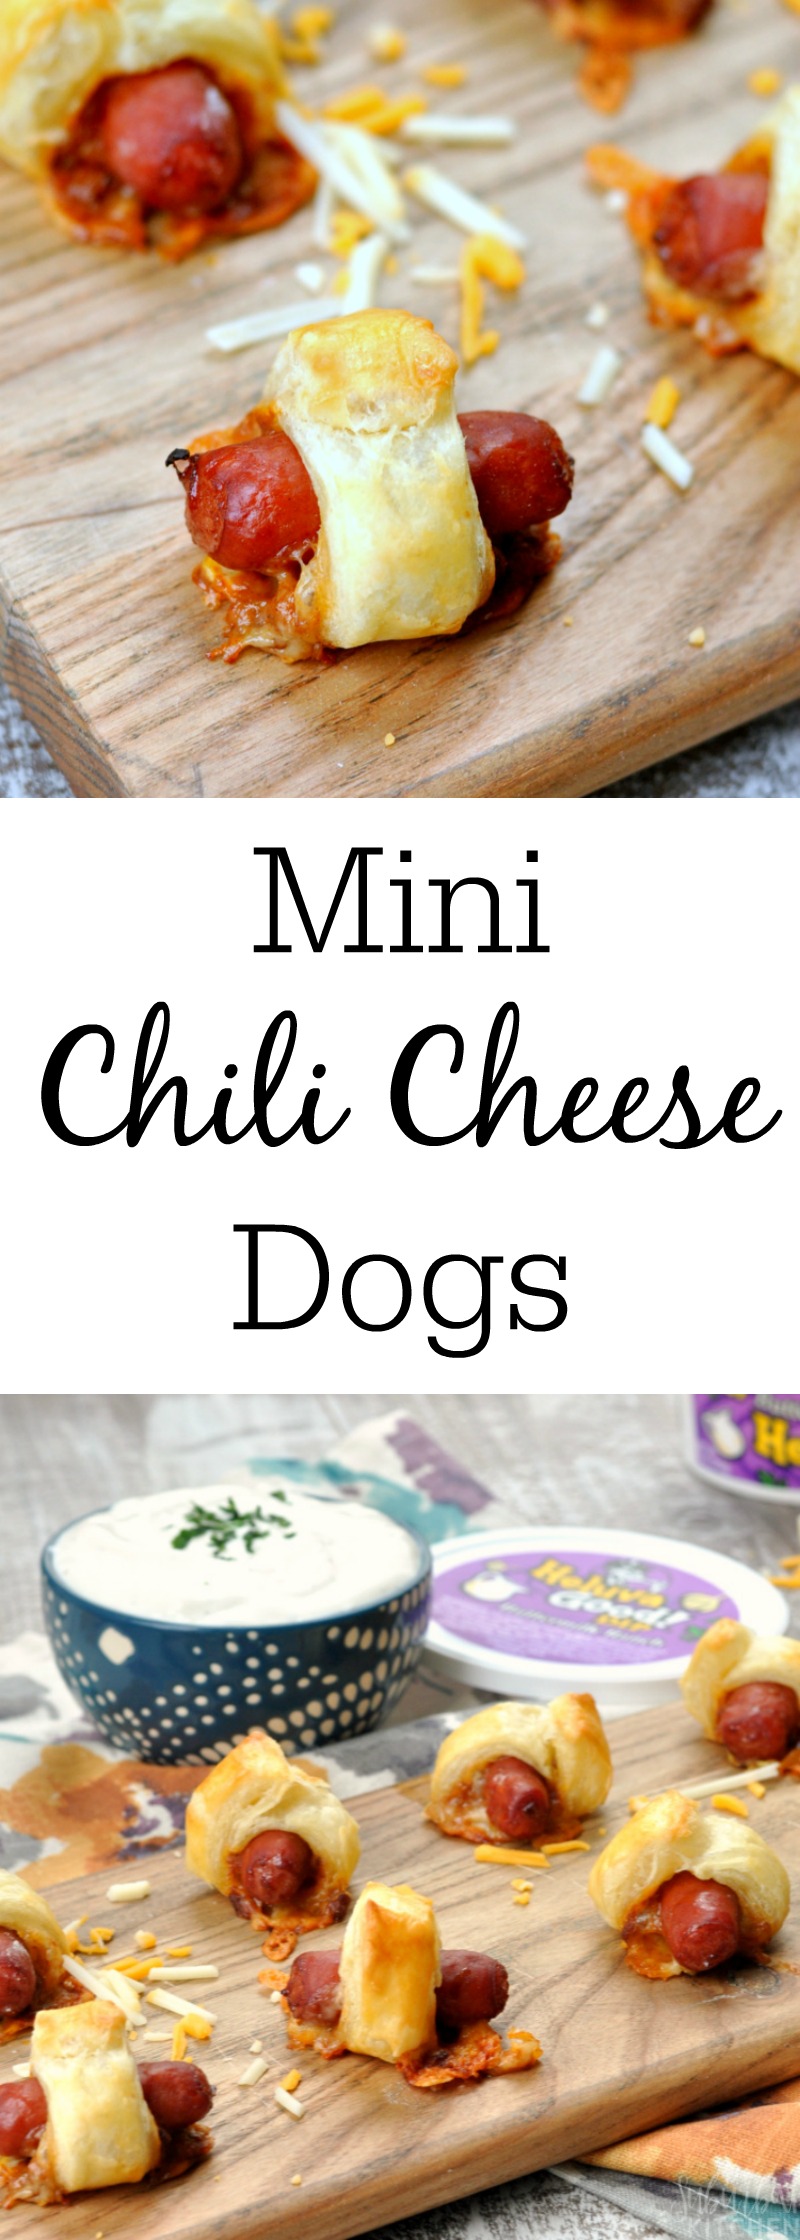 Mini Chili Cheese Dogs